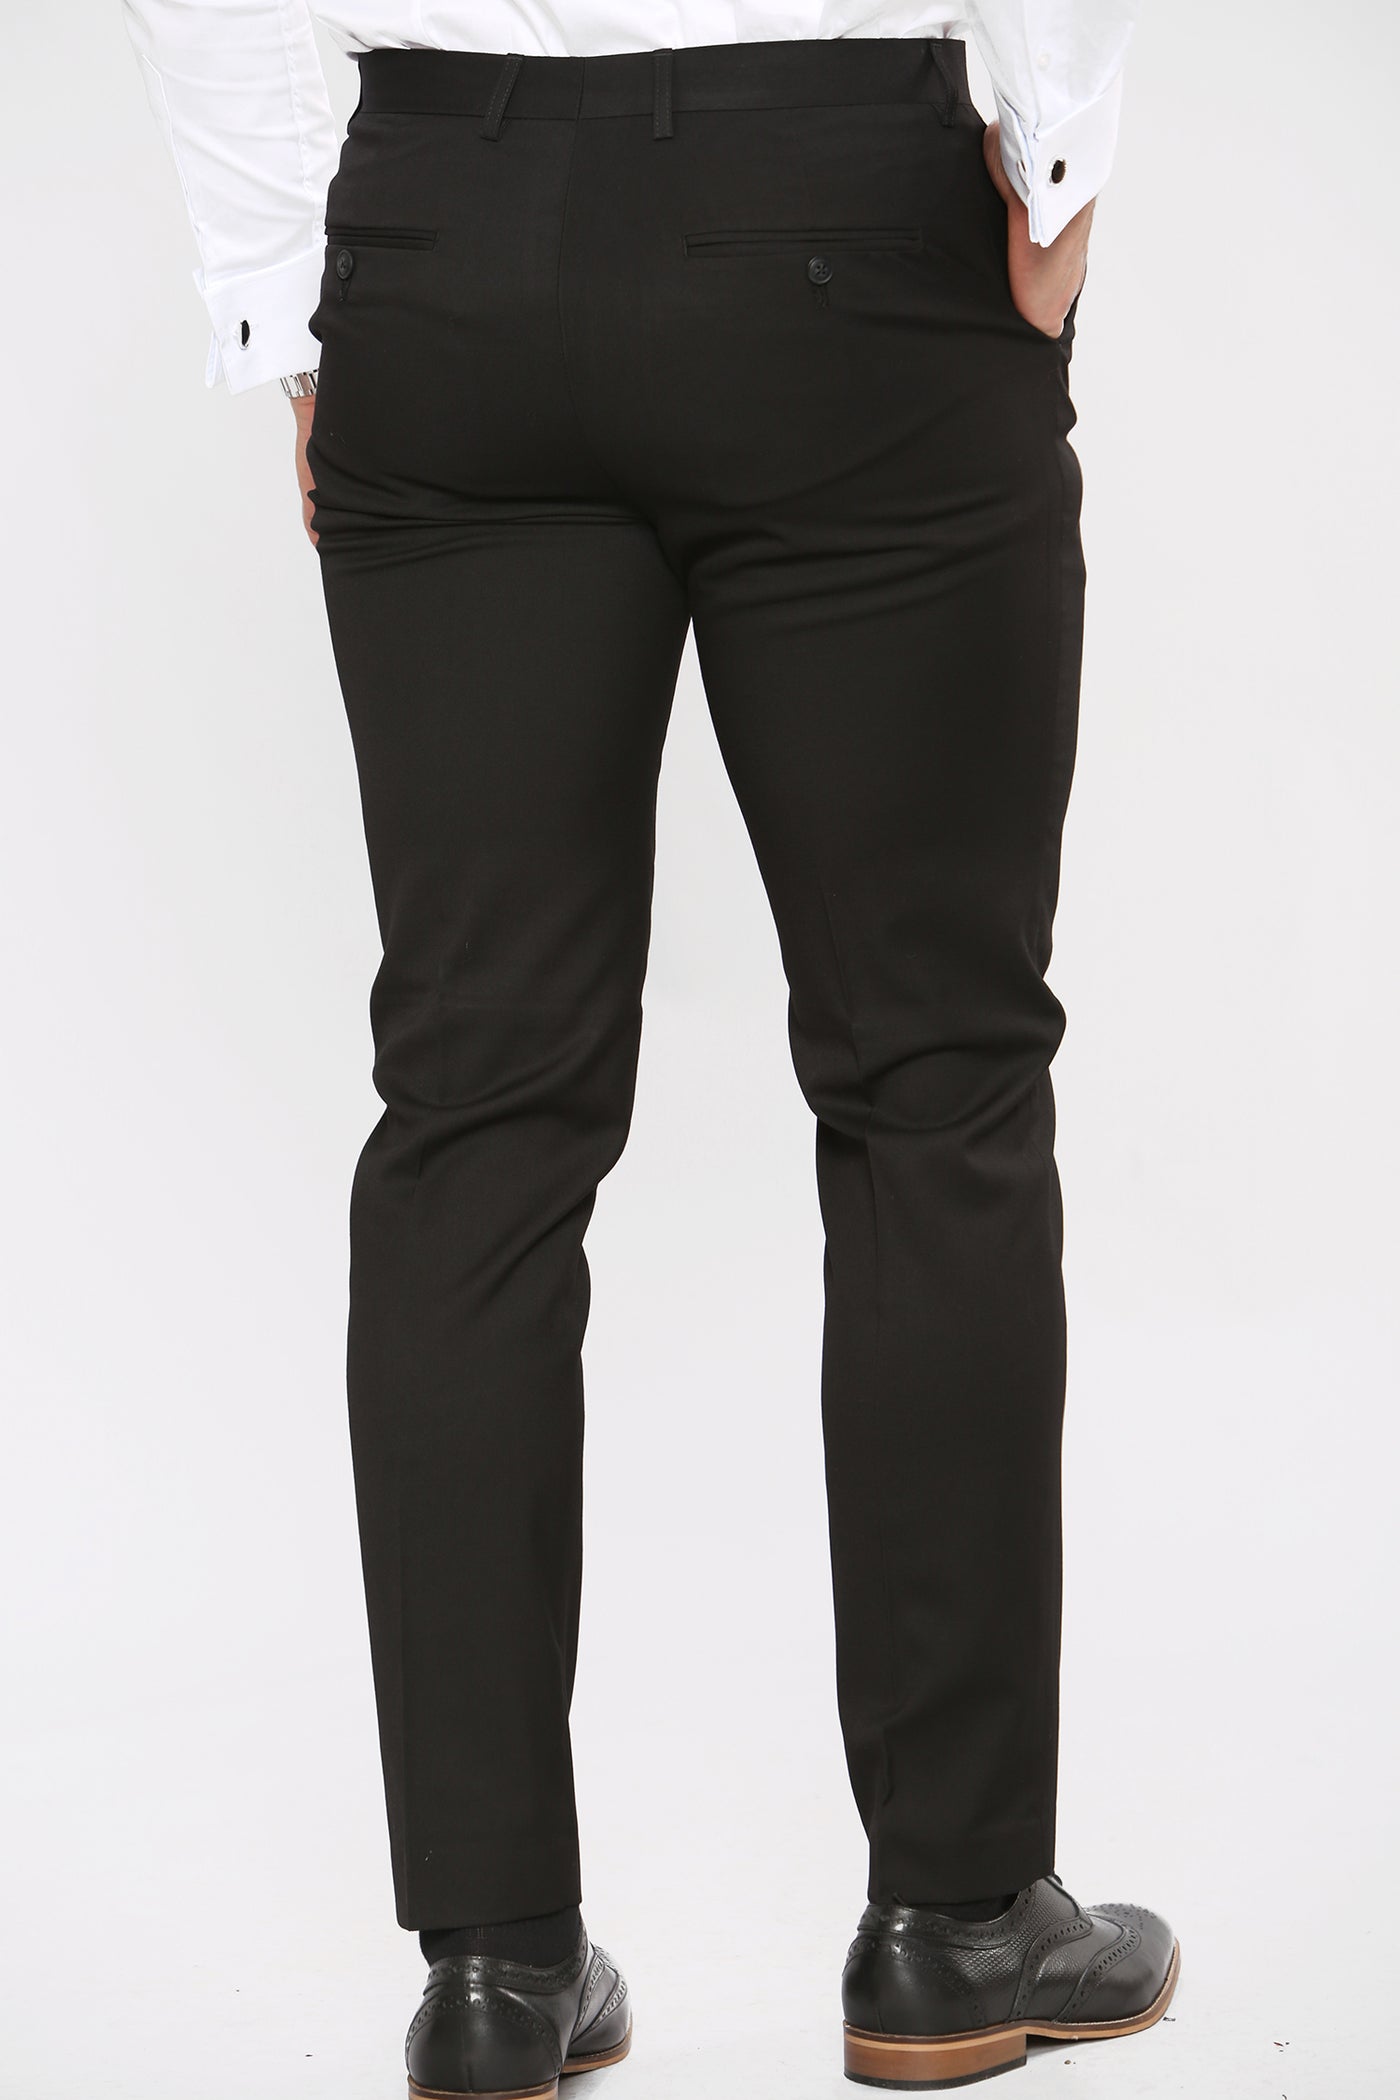 Cavani MARCO - Black Trouser